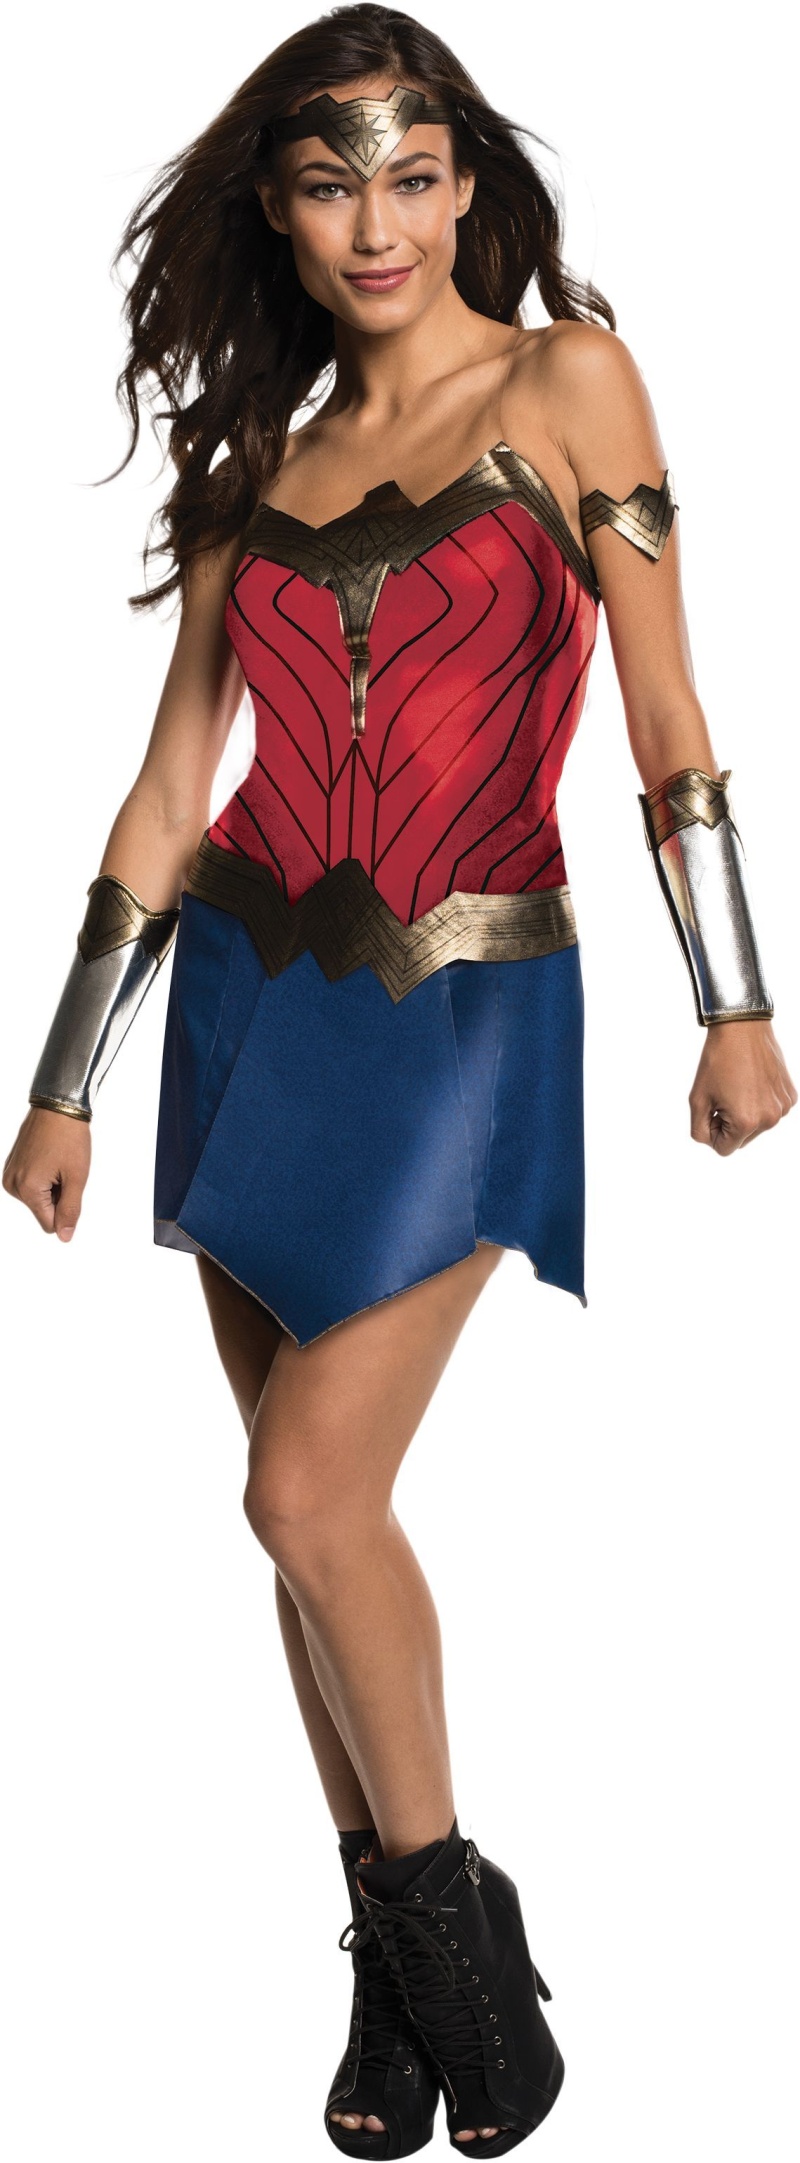 Wonder Woman Adult Costume Small